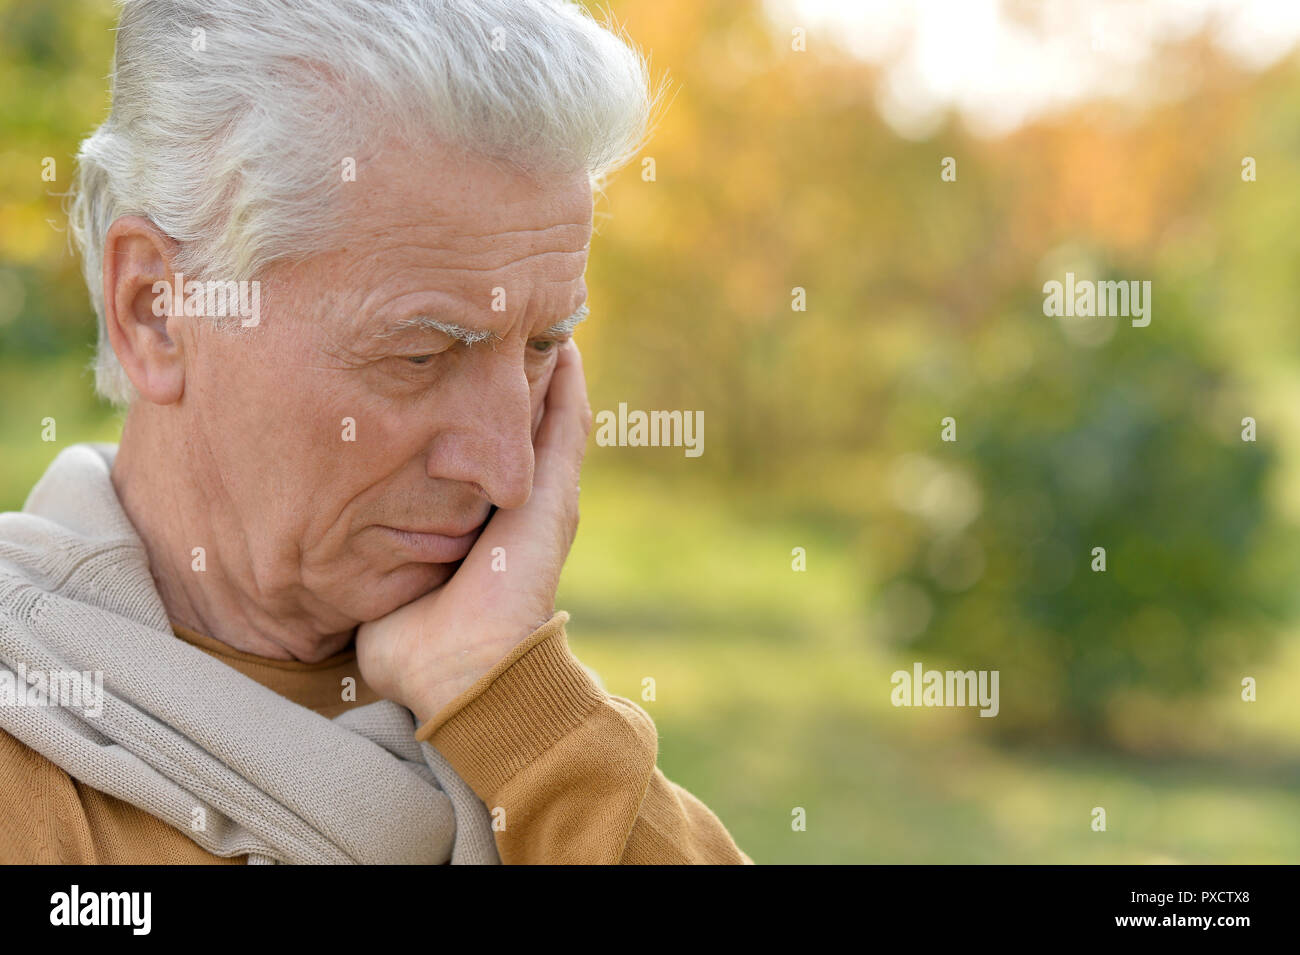 Portrait of a sad senior man outdoors Stock Photo